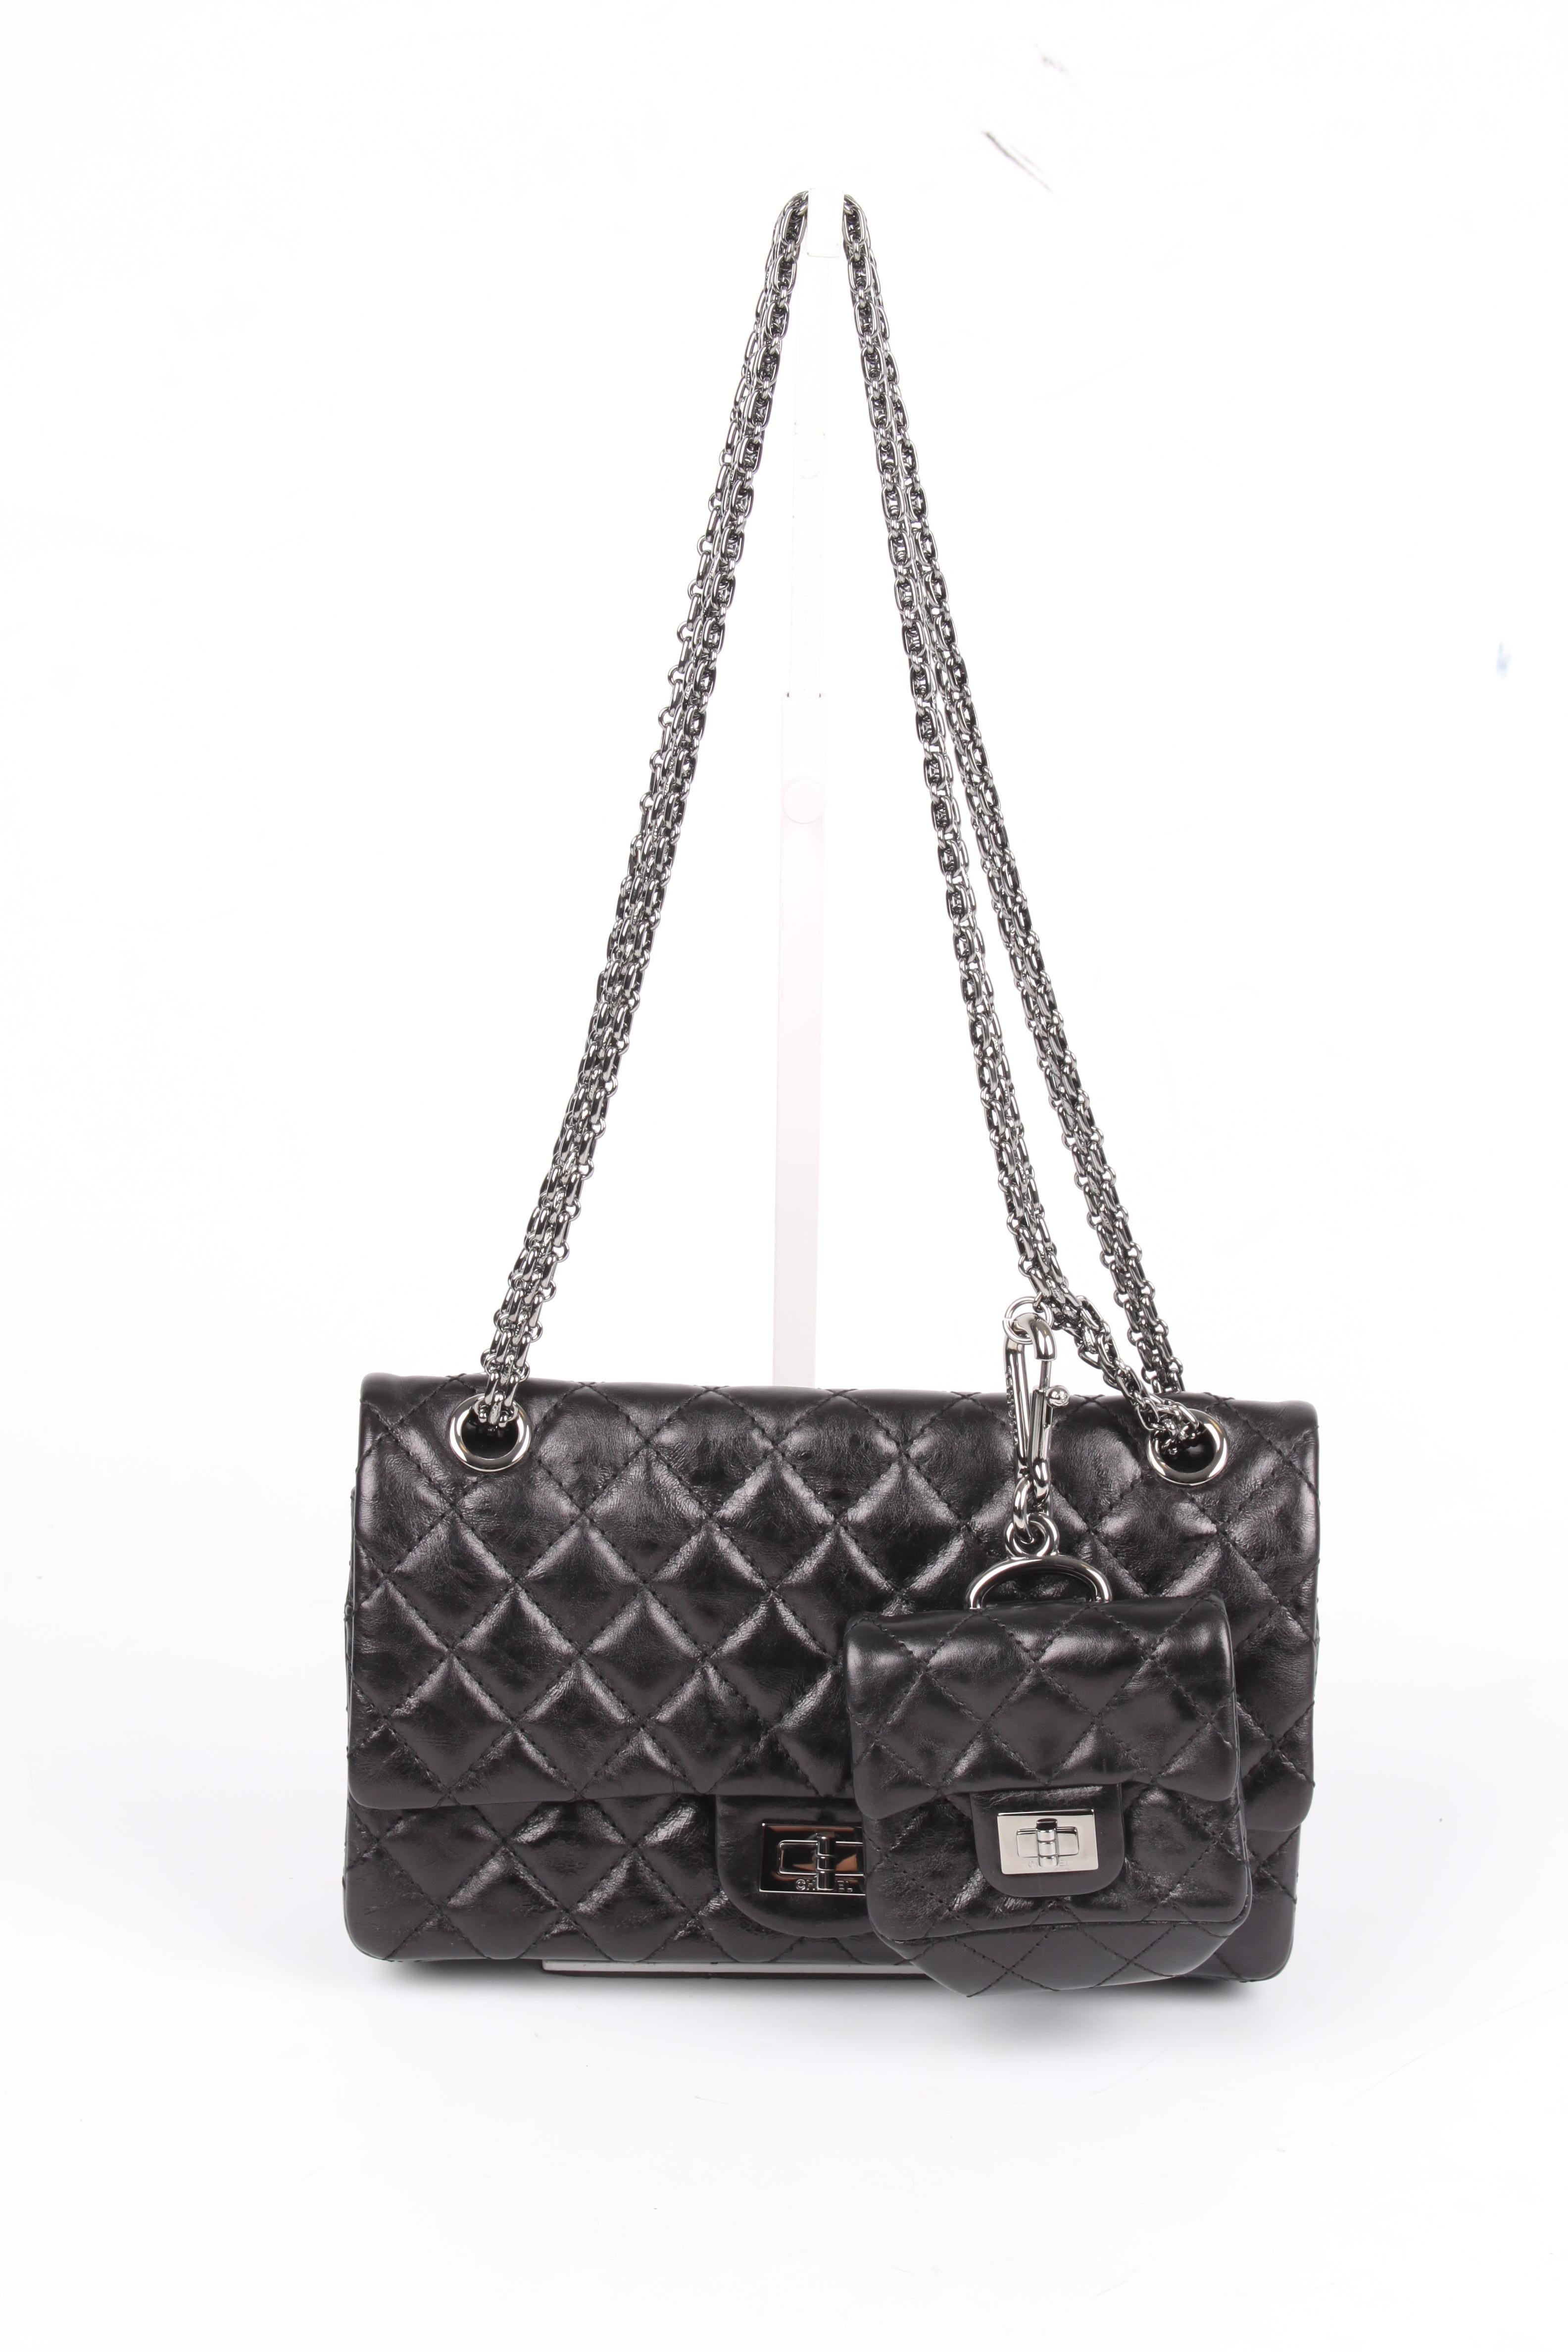 Chanel 2.55 Reissue Double Flap Bag with Mini Pochette - black 4